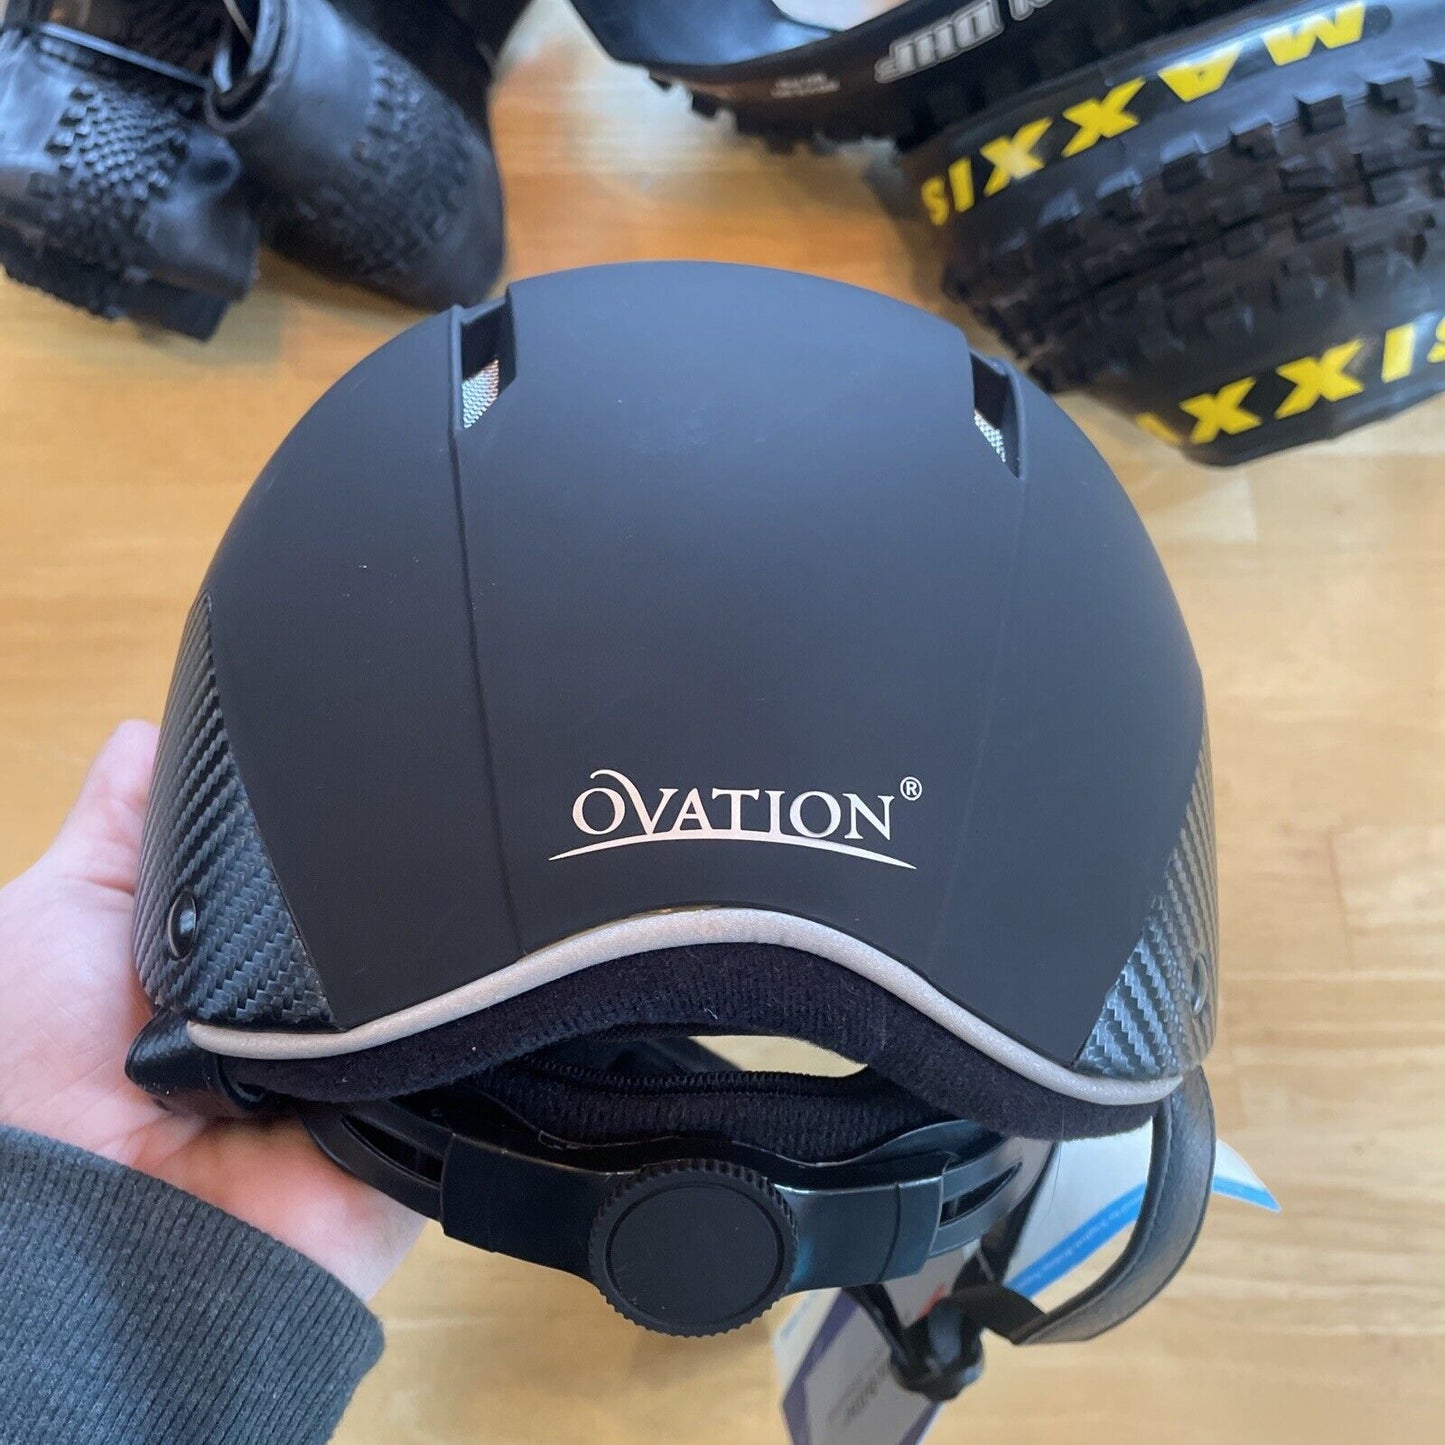 Ovation ASTM F1163-15 487585 Unisex Riding Helmet Size M/L 57-61cm Black SEEDESC